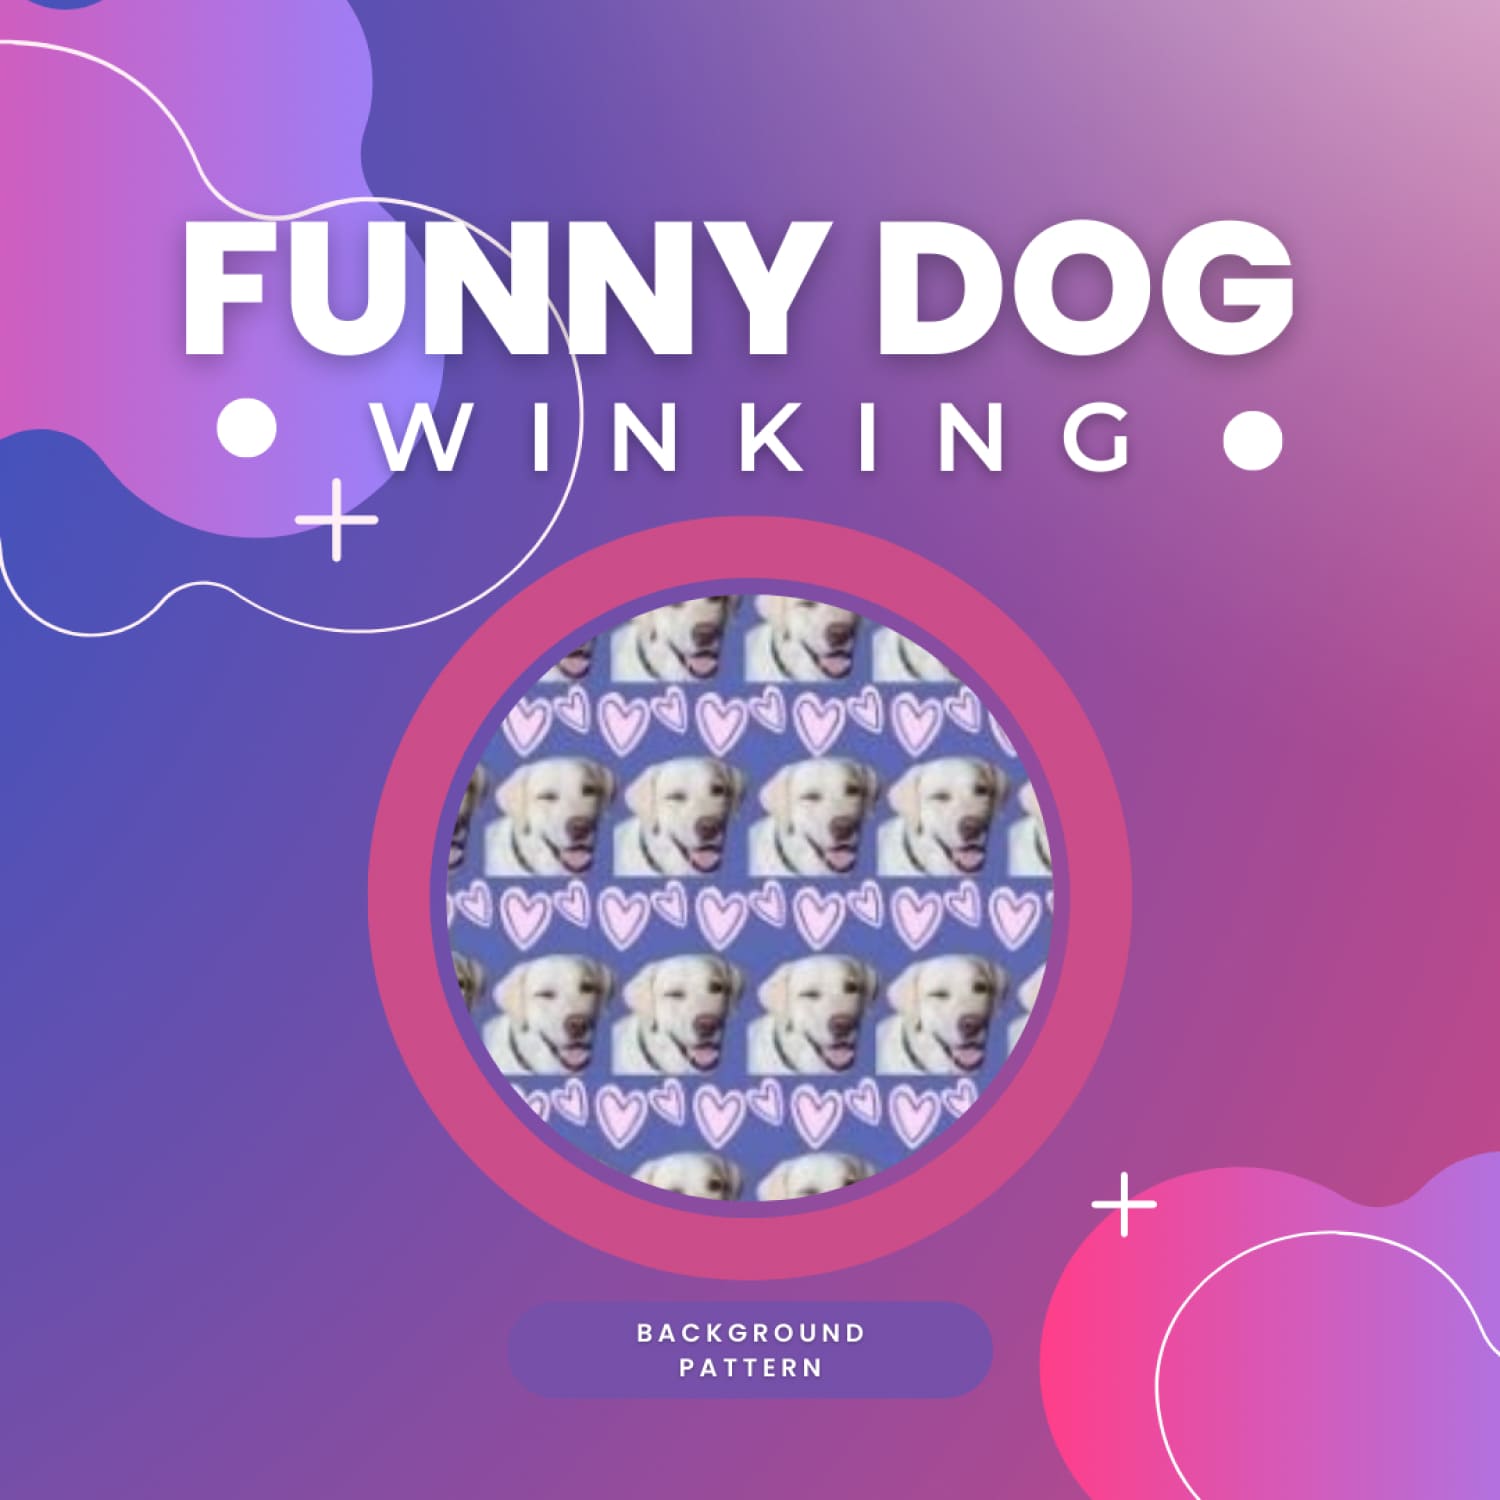 Funny Dog Winking Background Pattern.